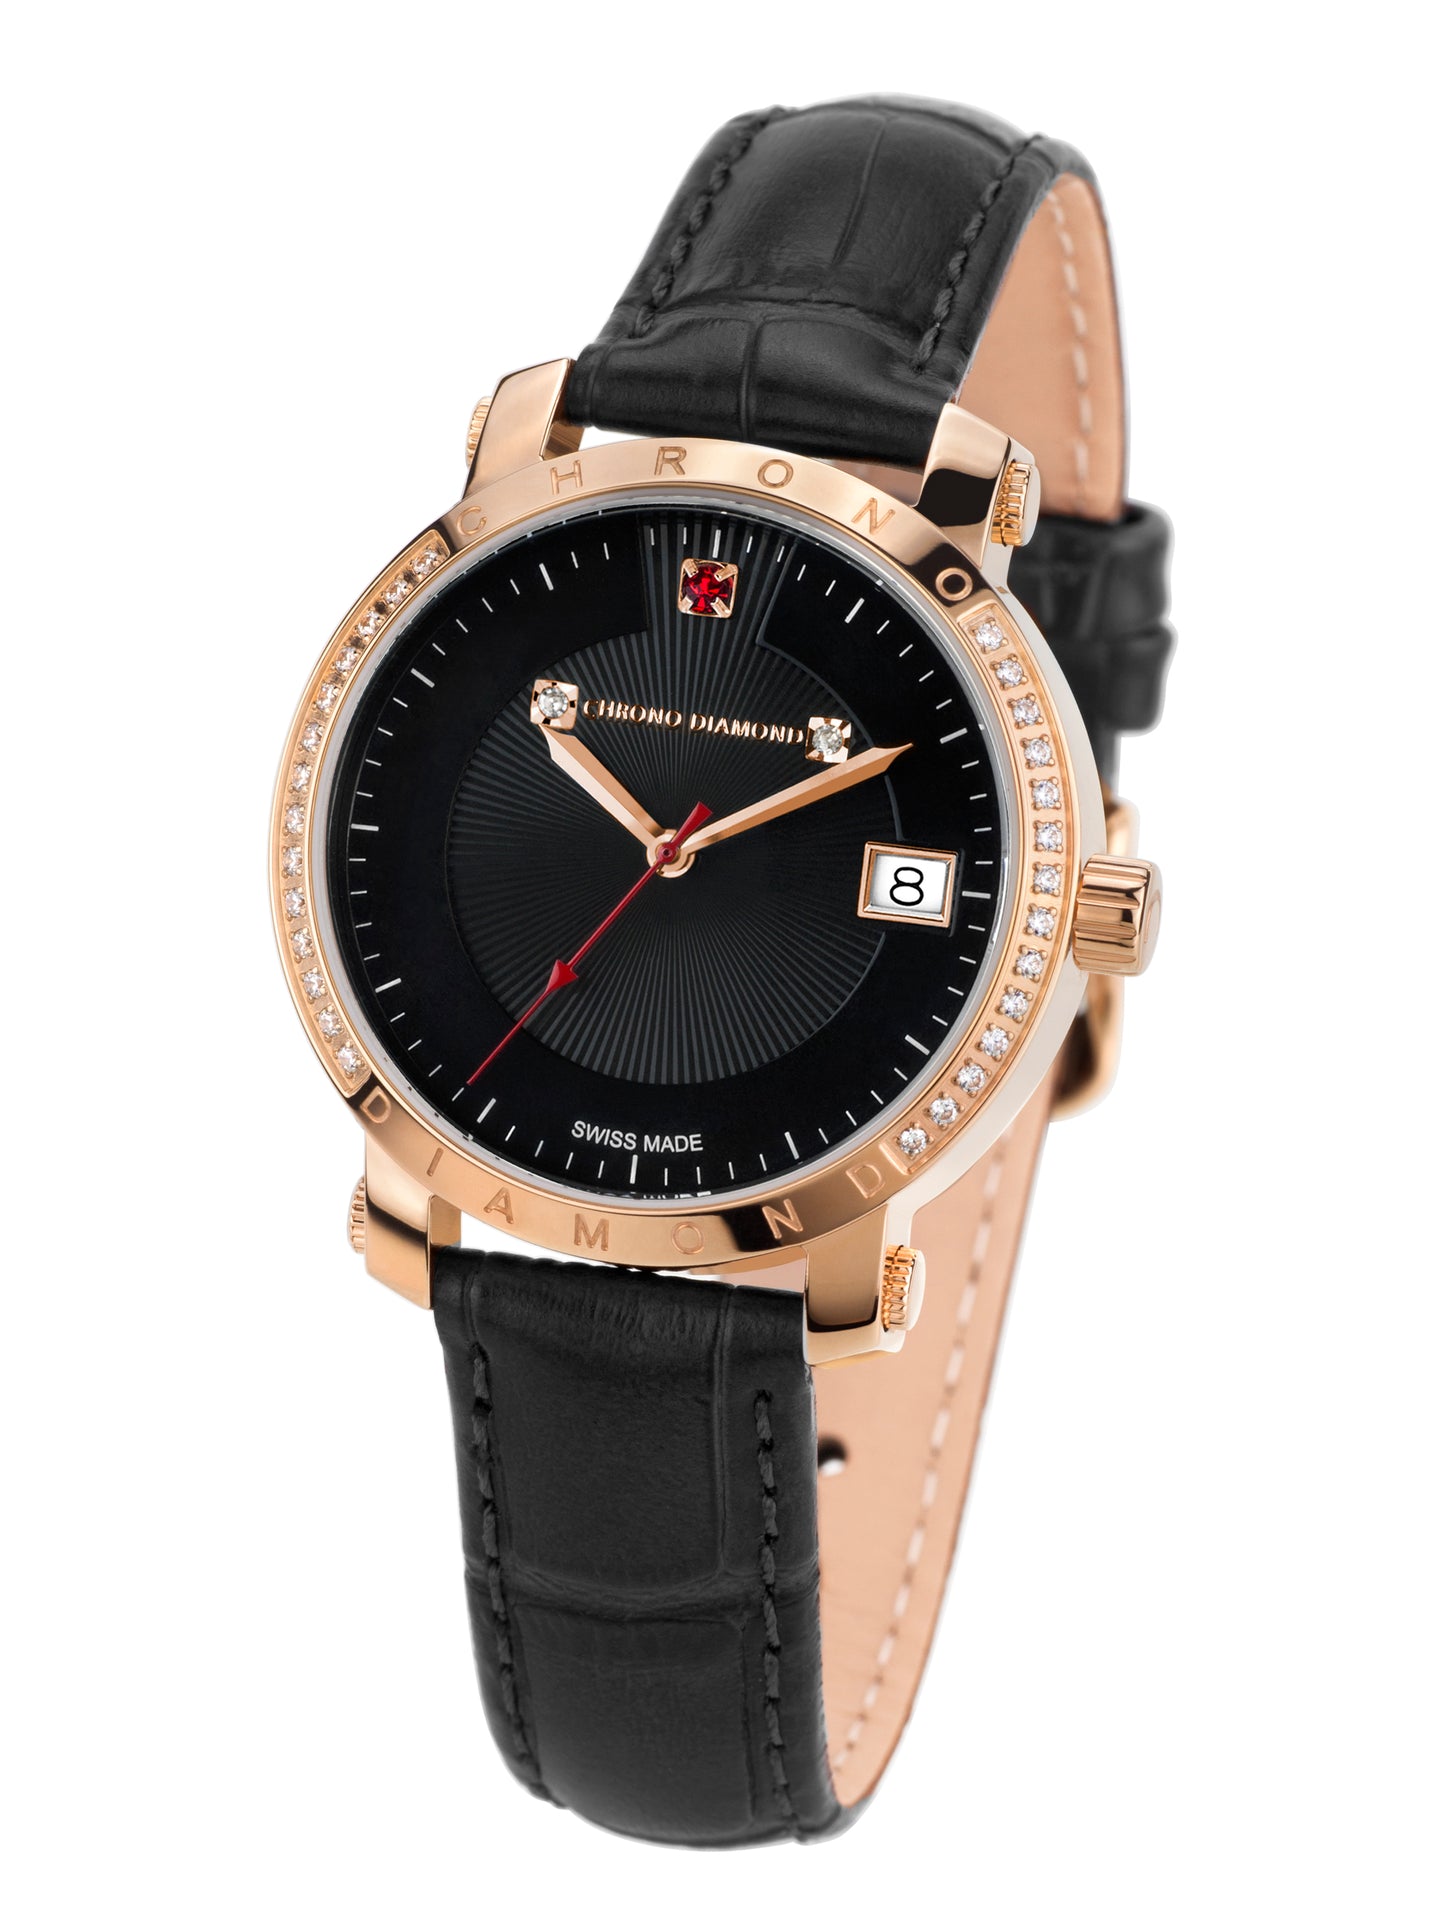 Automatic watches — Nesta — Chrono Diamond — rosegold IP black leather red stone